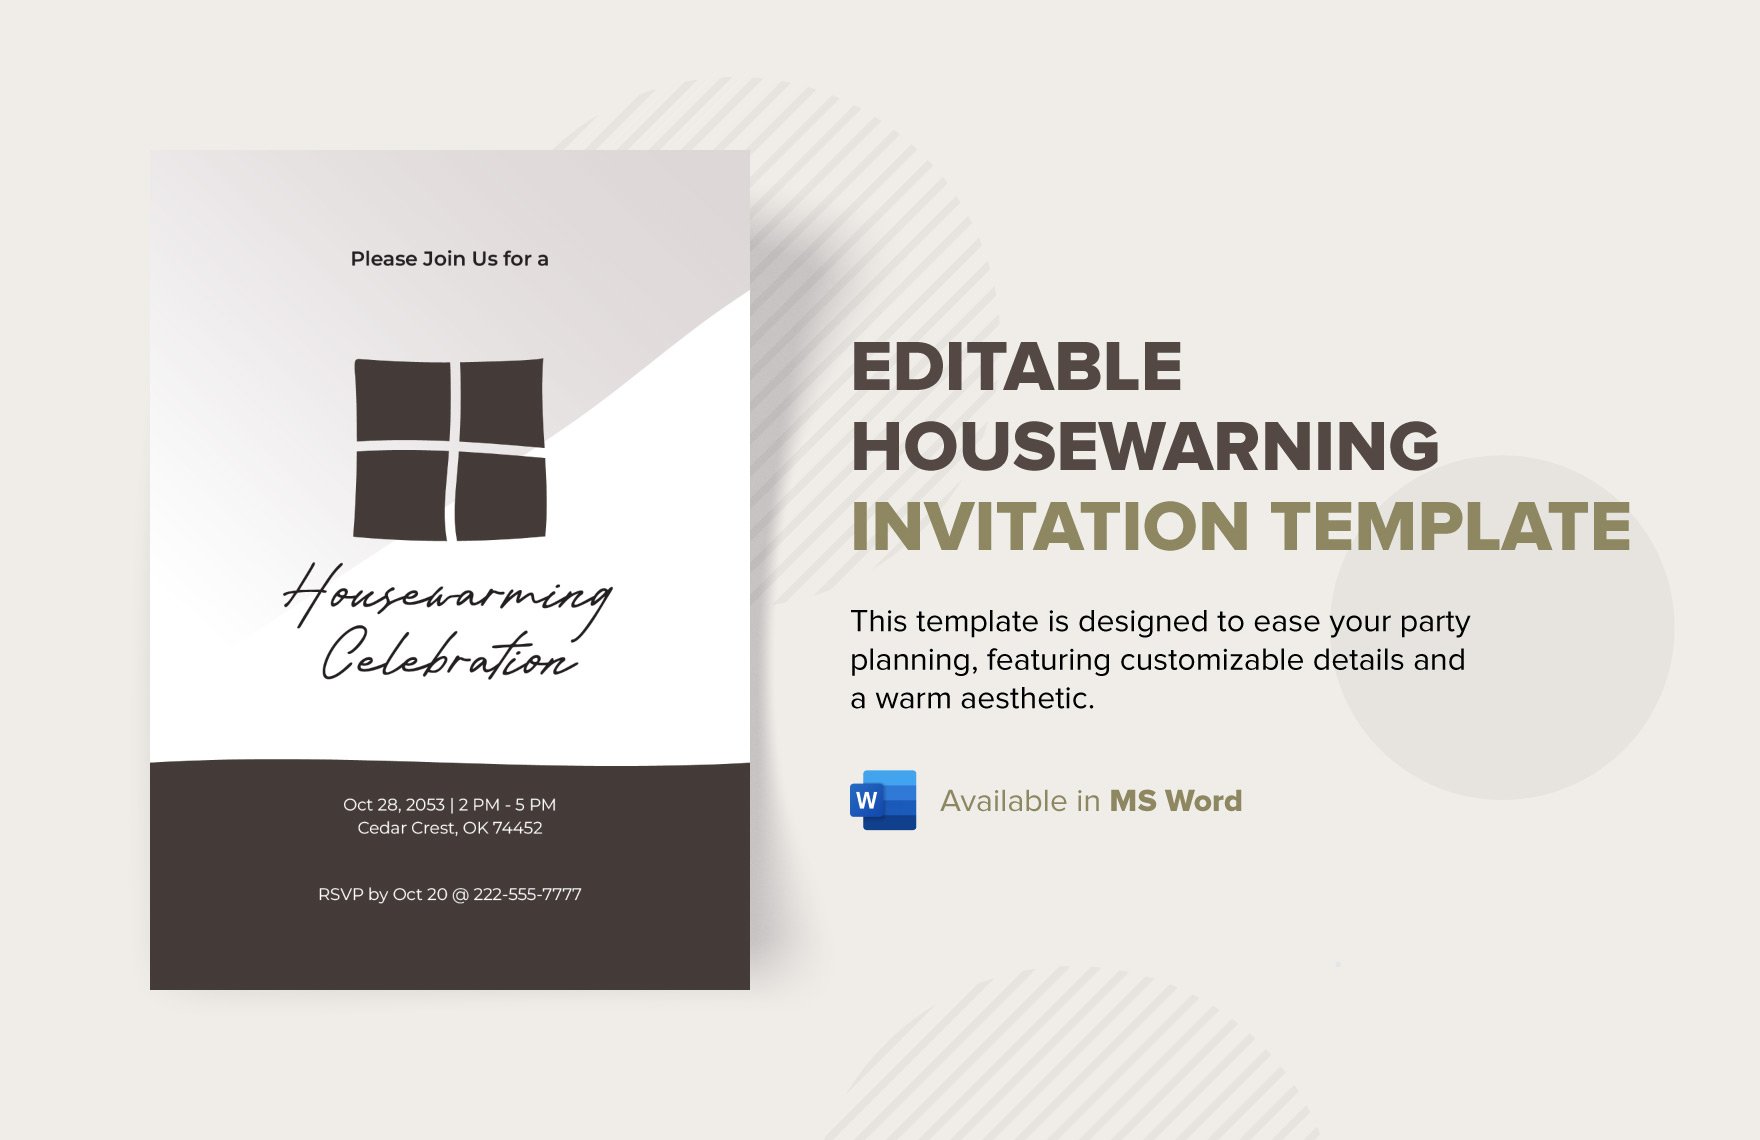 Editable Housewarning Invitation Template